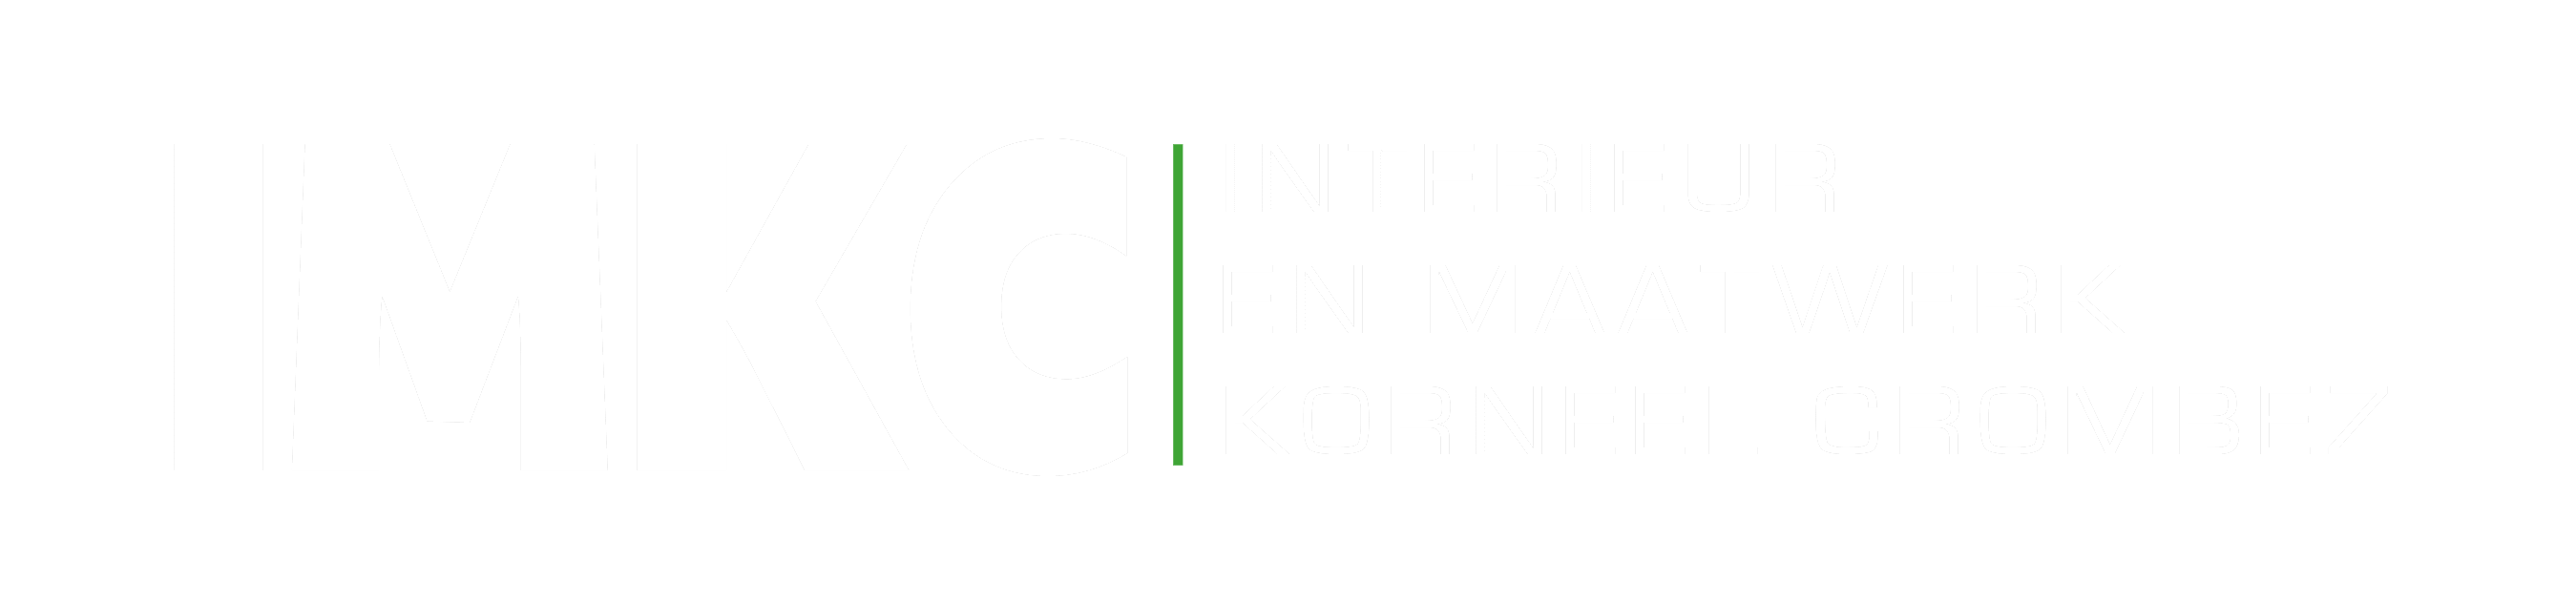 IMKC Logo